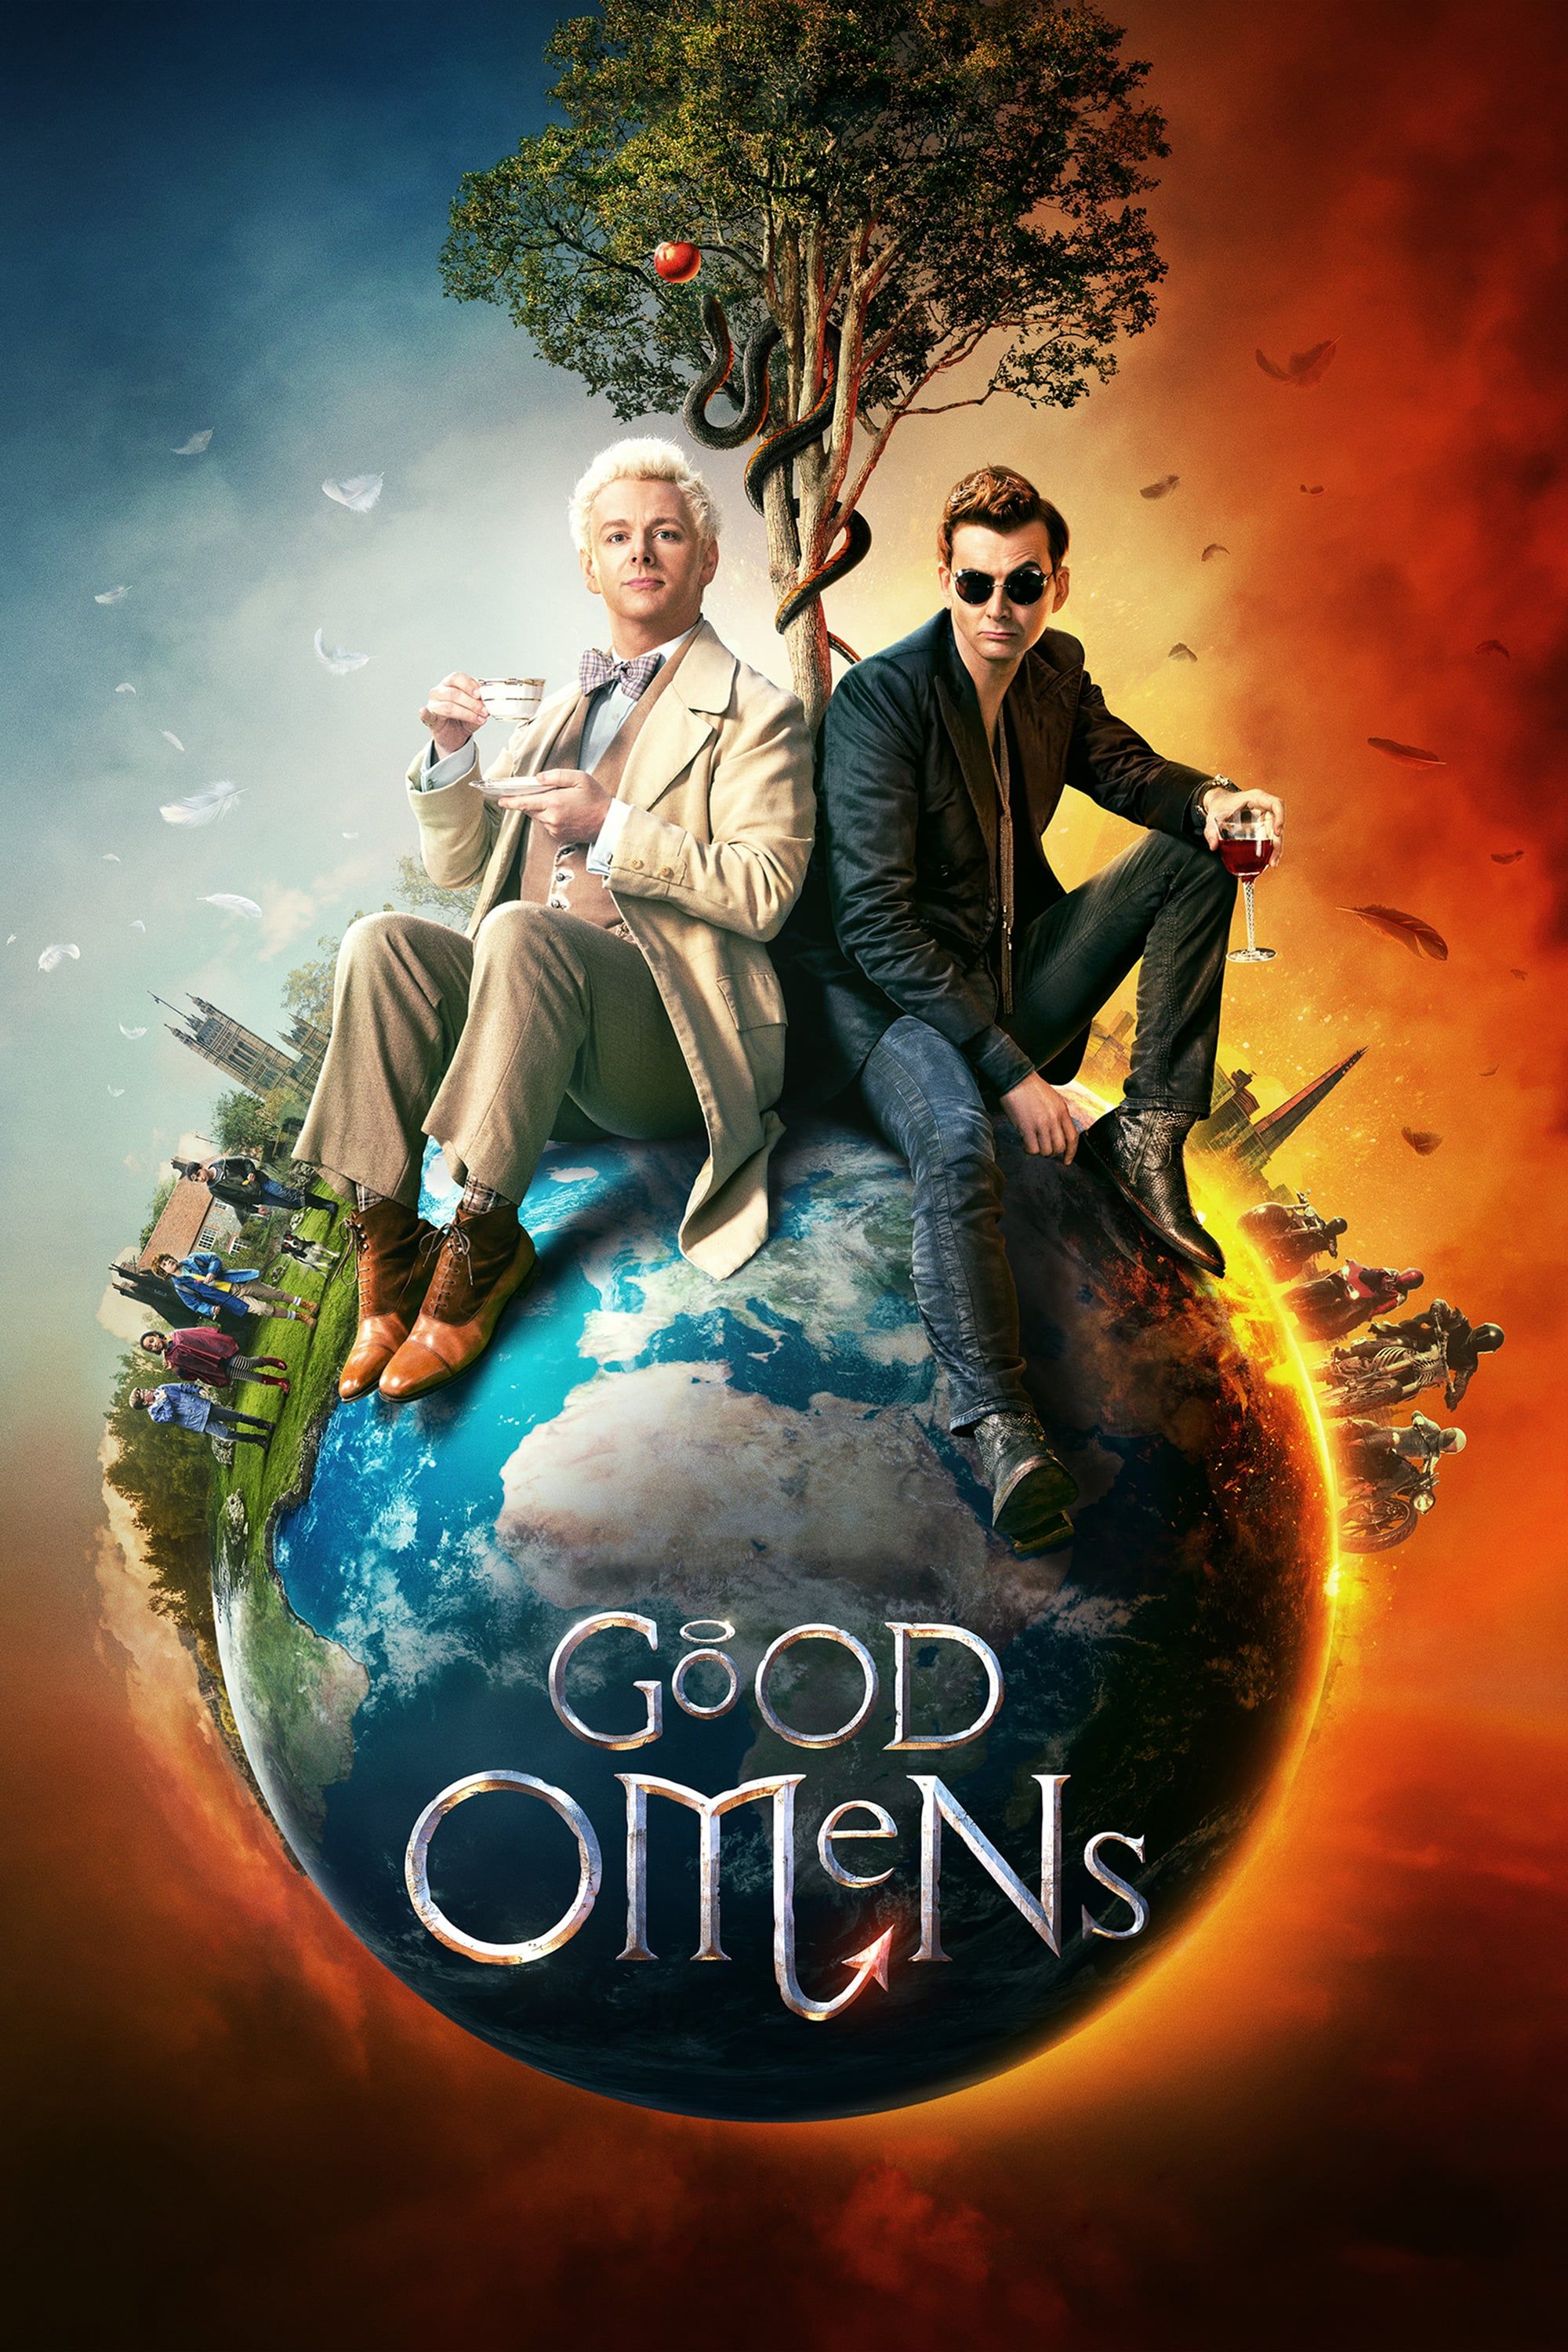 Neil Gaiman's 'Good Omens': Season 2 Trailer